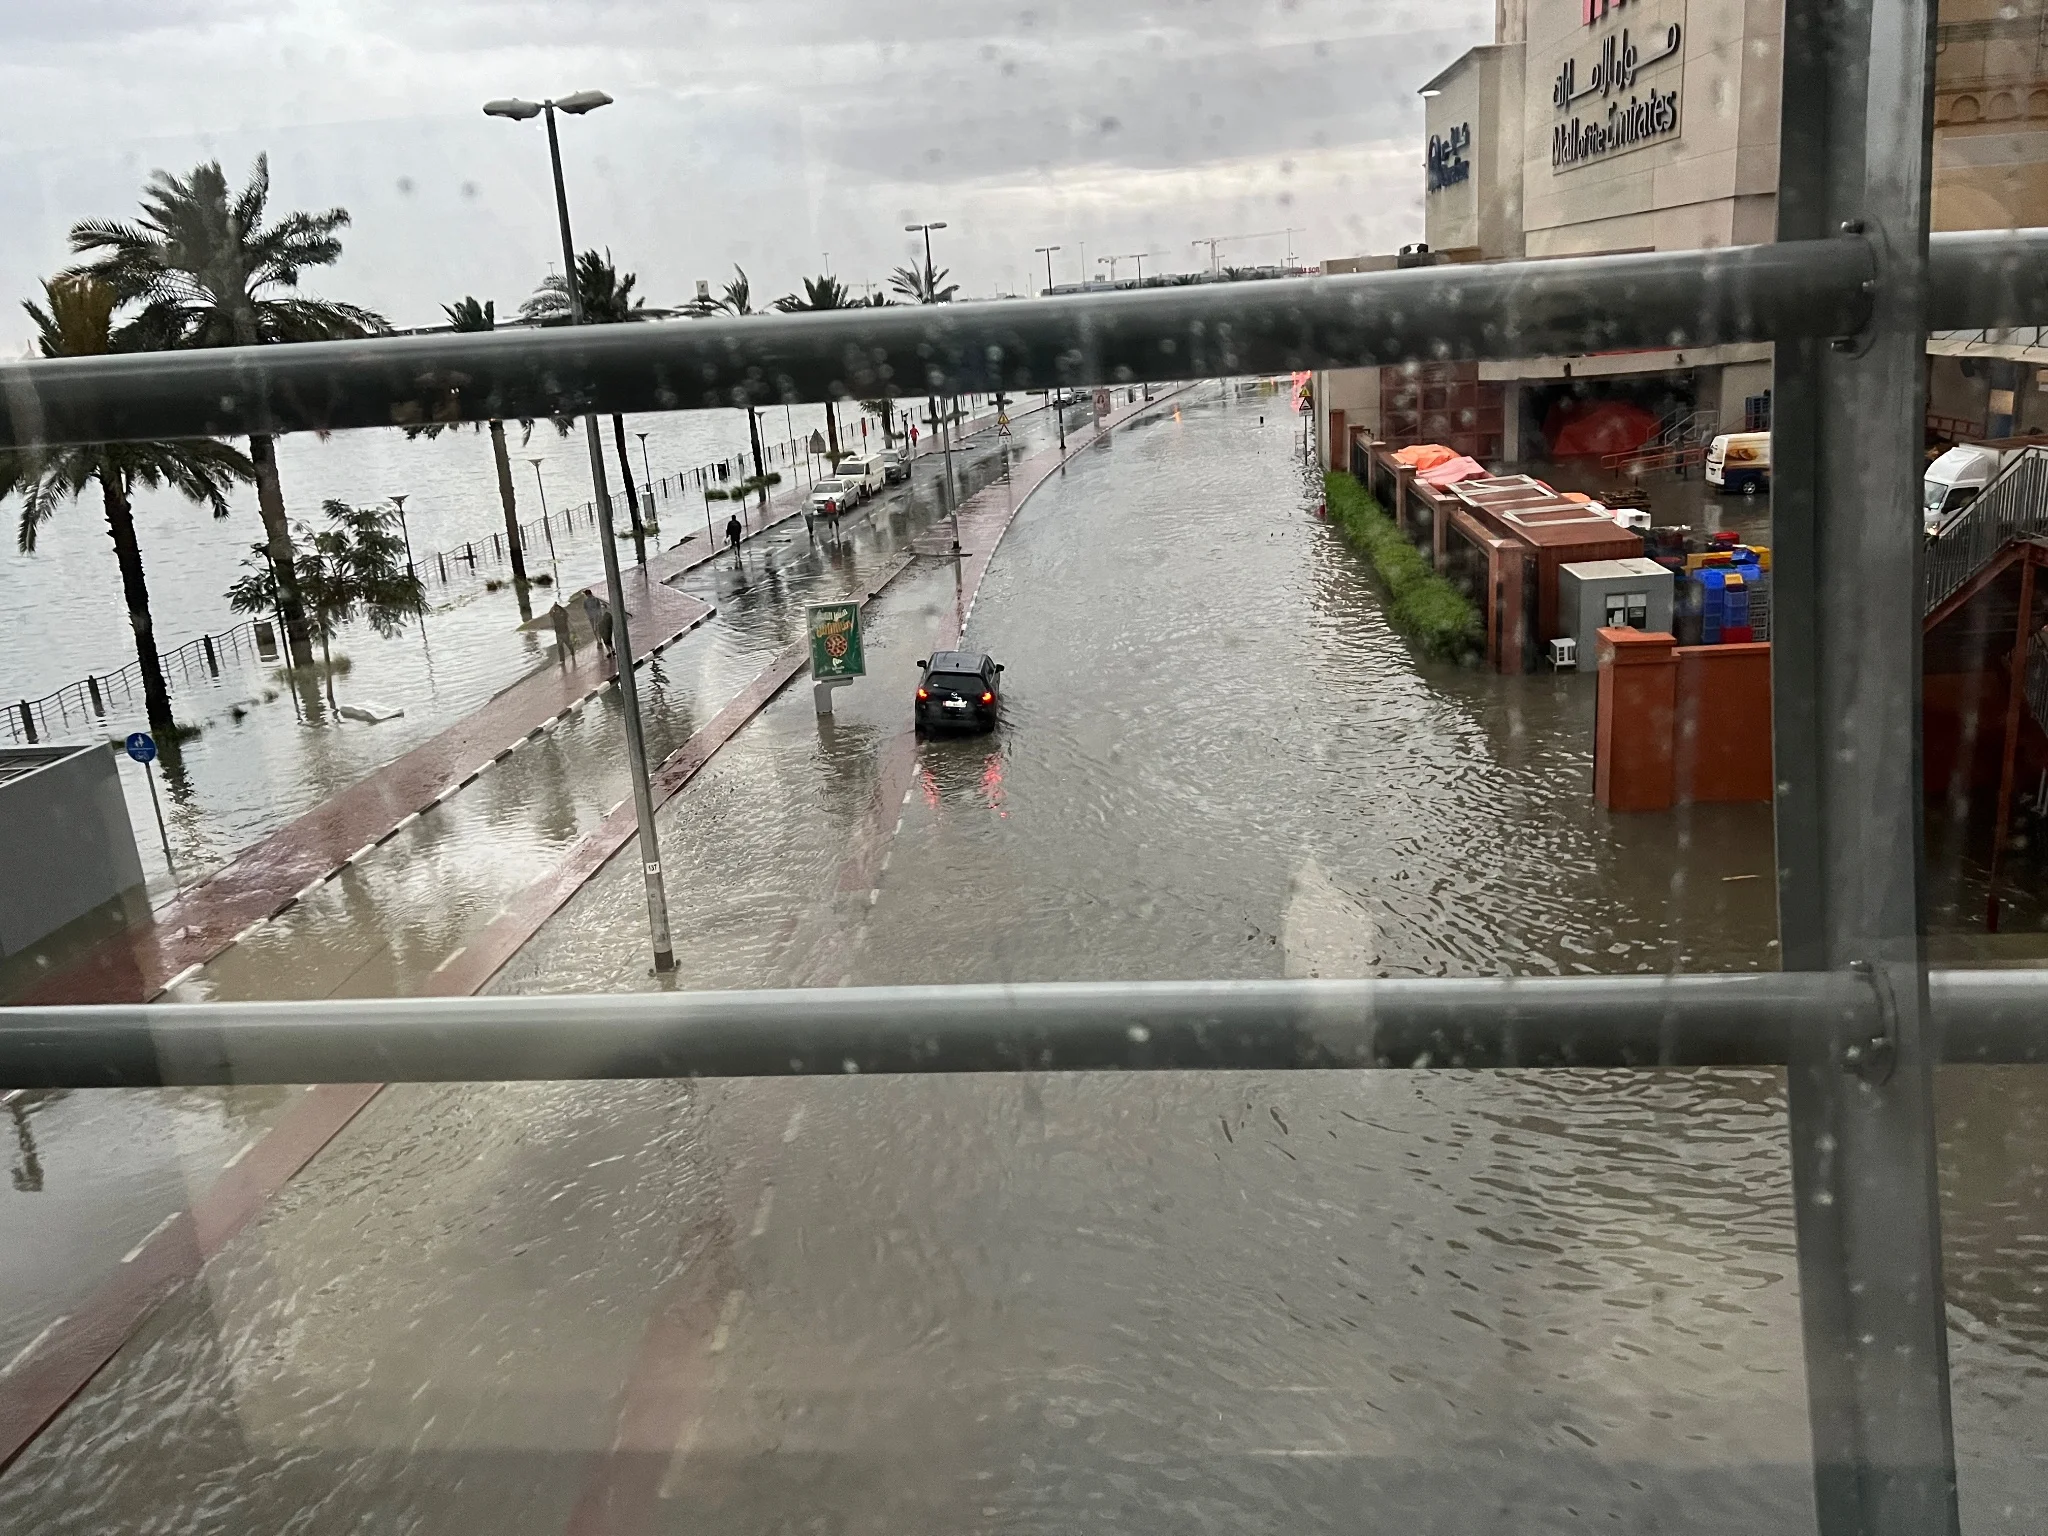 Dubai comes to a standstill as cloud seeding causes heavy rains, floods